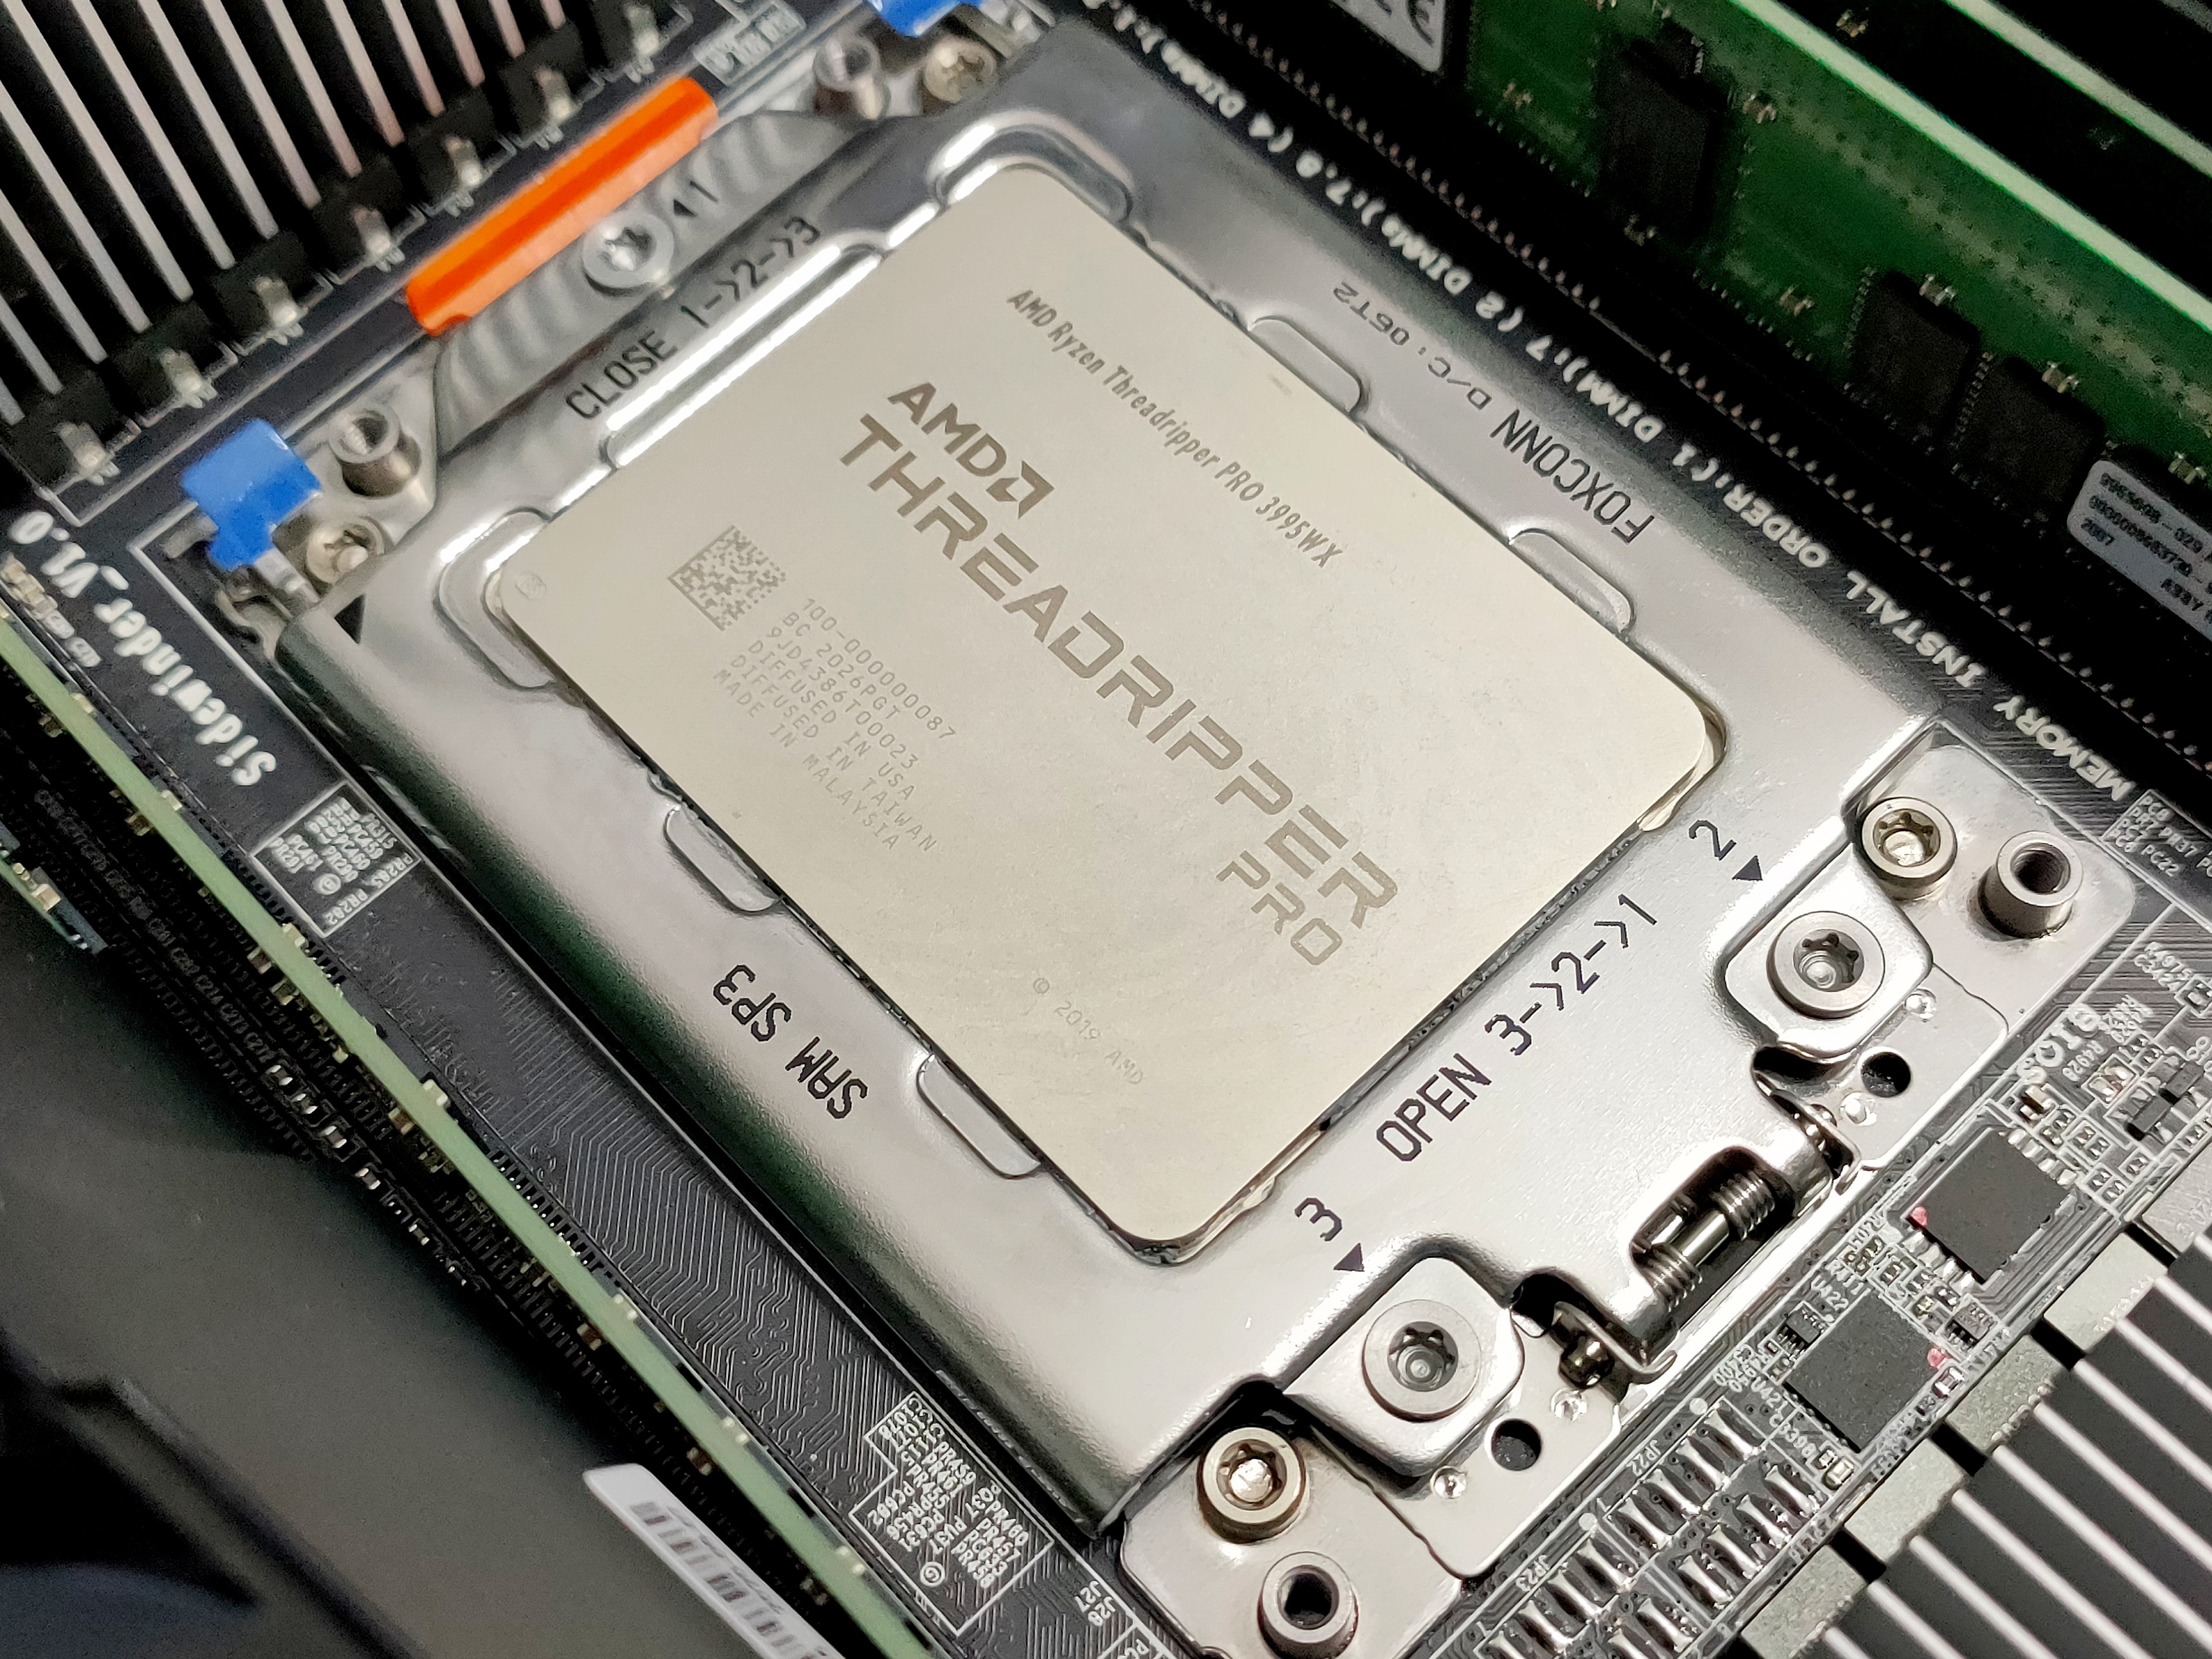 Conclusion - AMD Threadripper Pro Review: An Upgrade Over Regular  Threadripper?